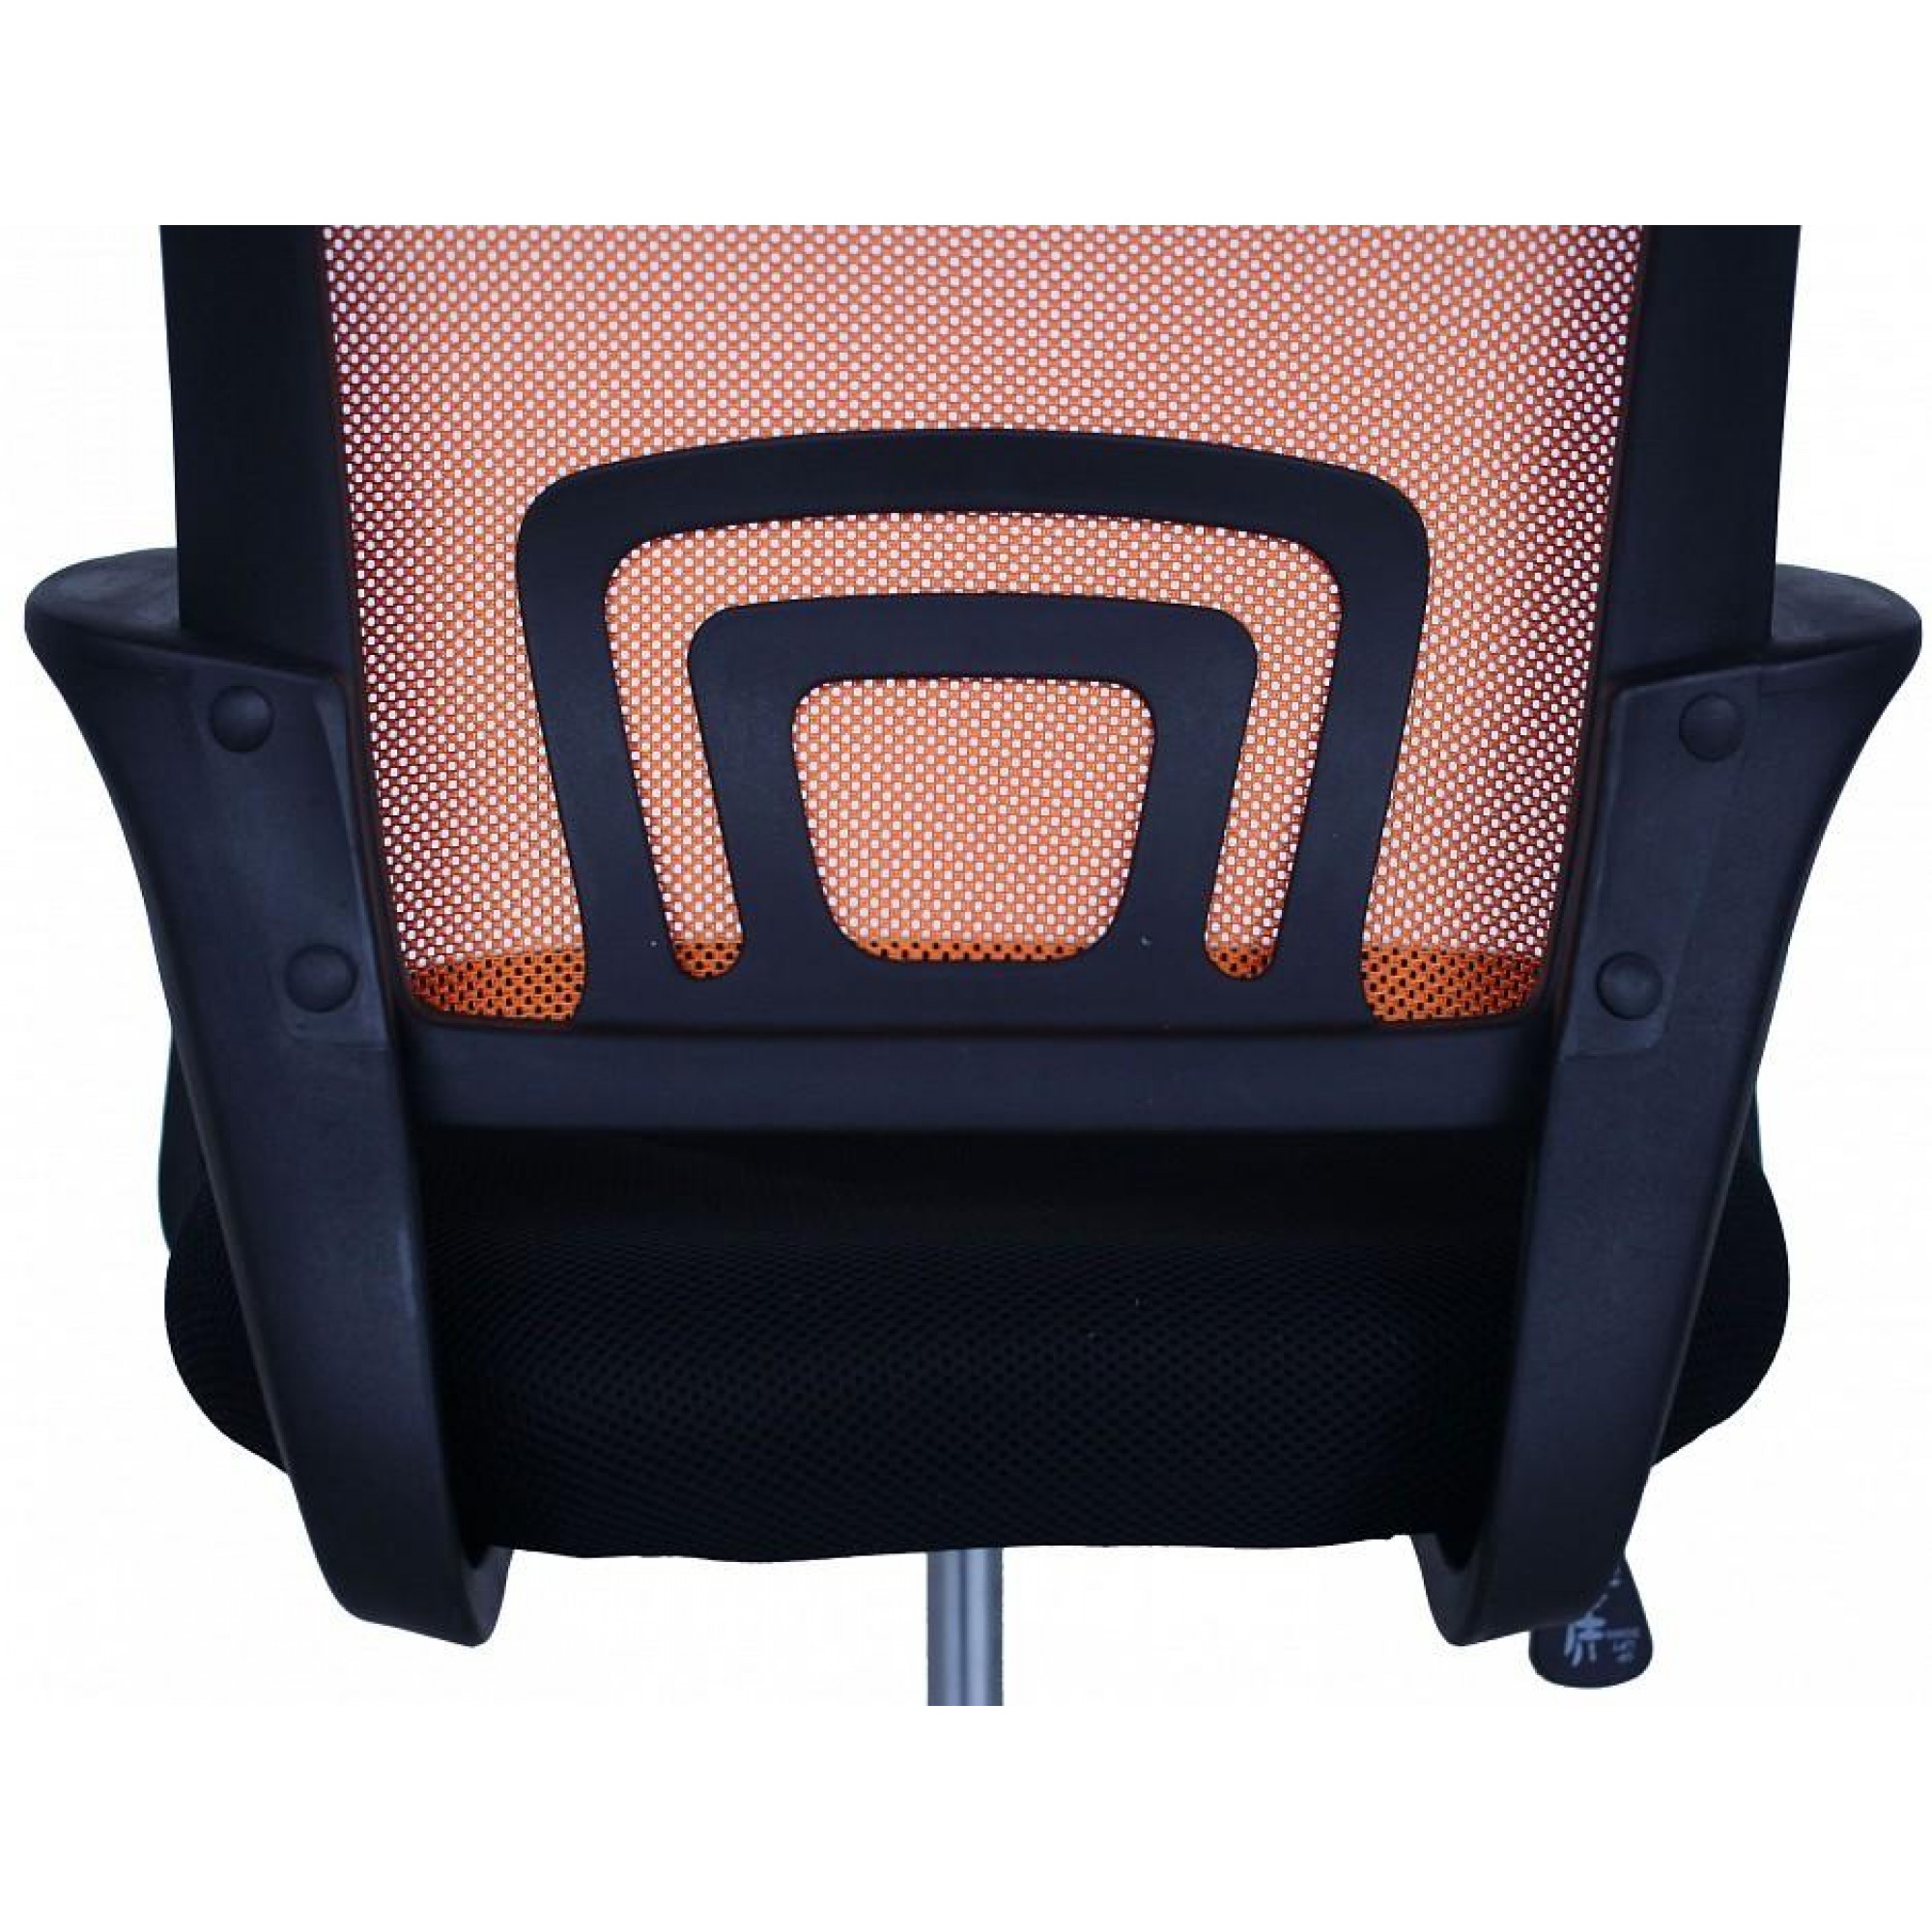 Кресло компьютерное MF-696 404492, MF-696 orange